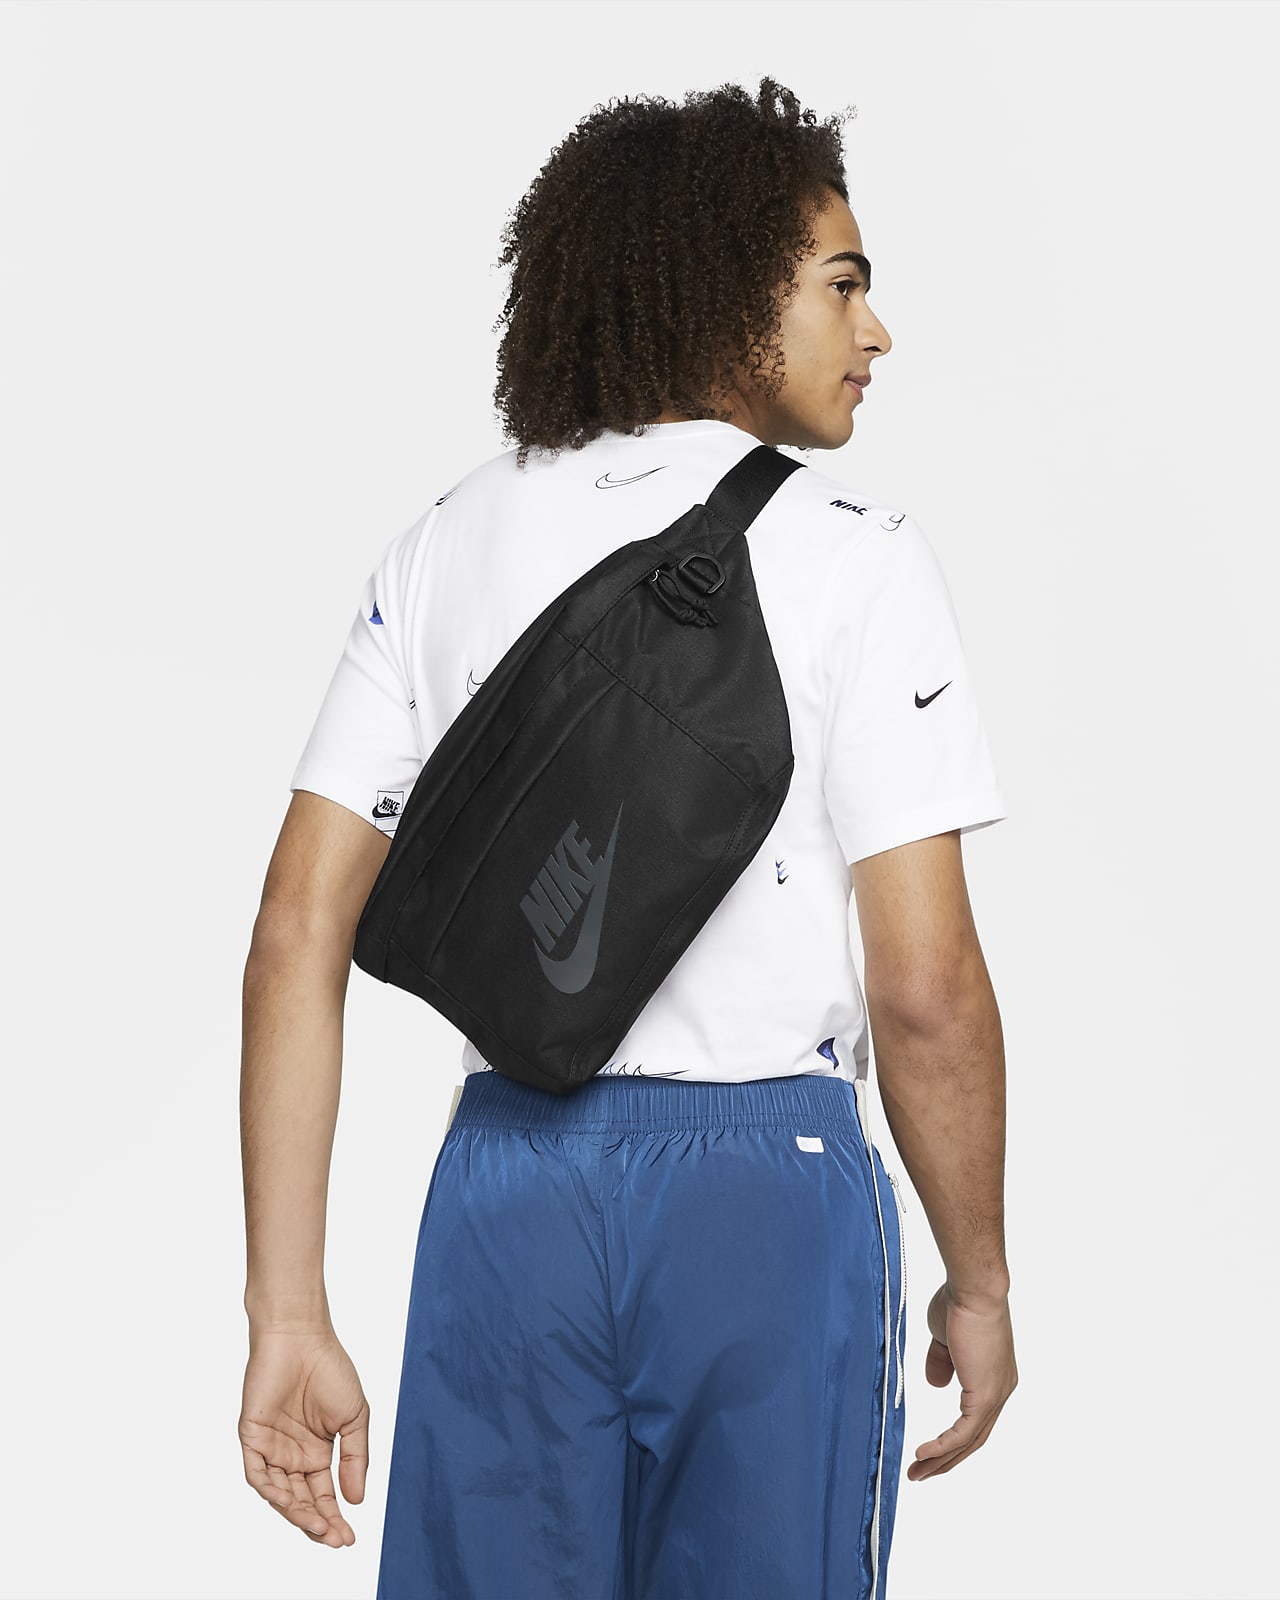 nike tech hip pack gymsack lining bag sports soccer travel cycling